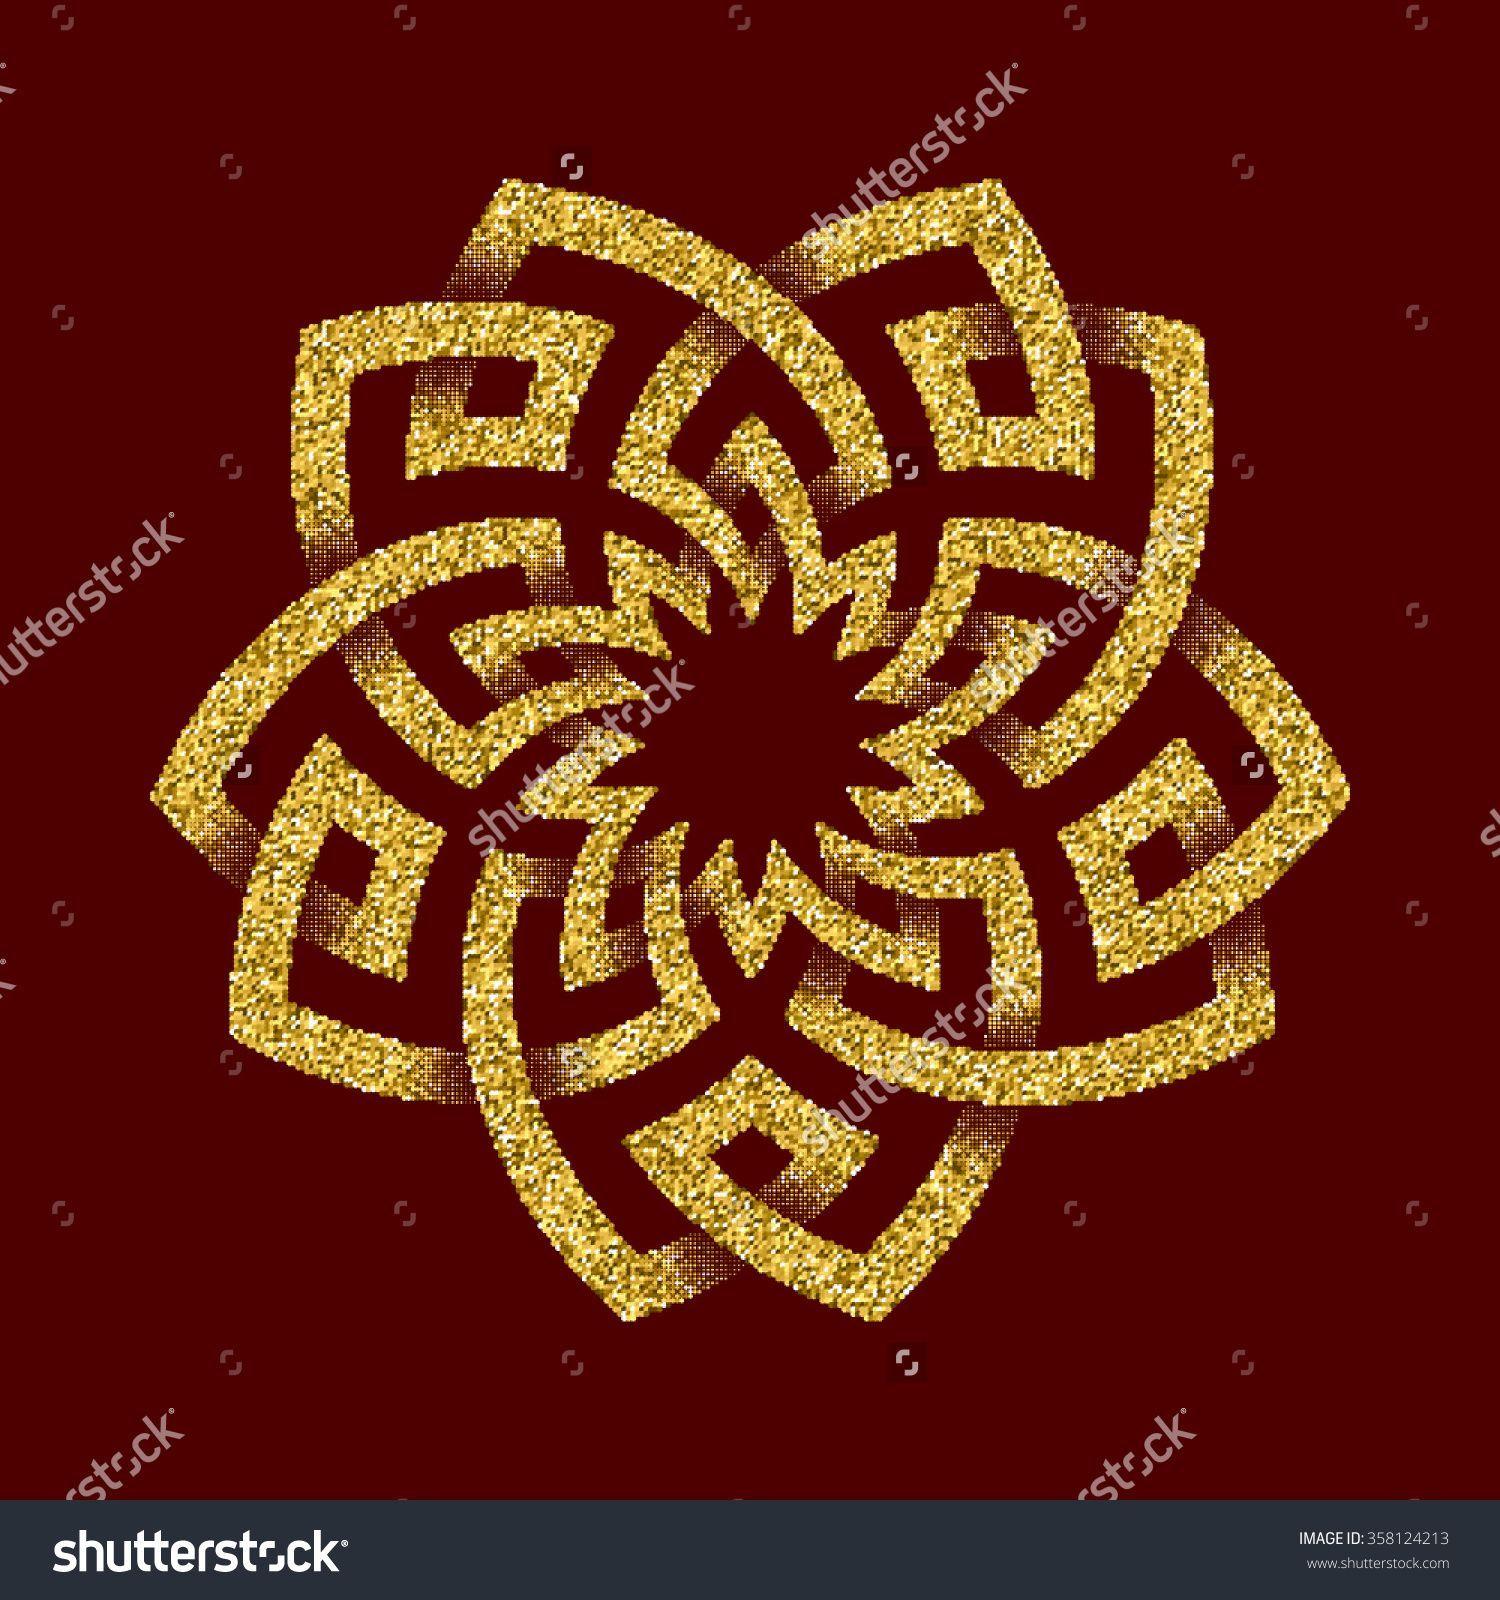 Red Pentagon Logo - Golden glittering #logo template in #Celtic knots style on dark red ...